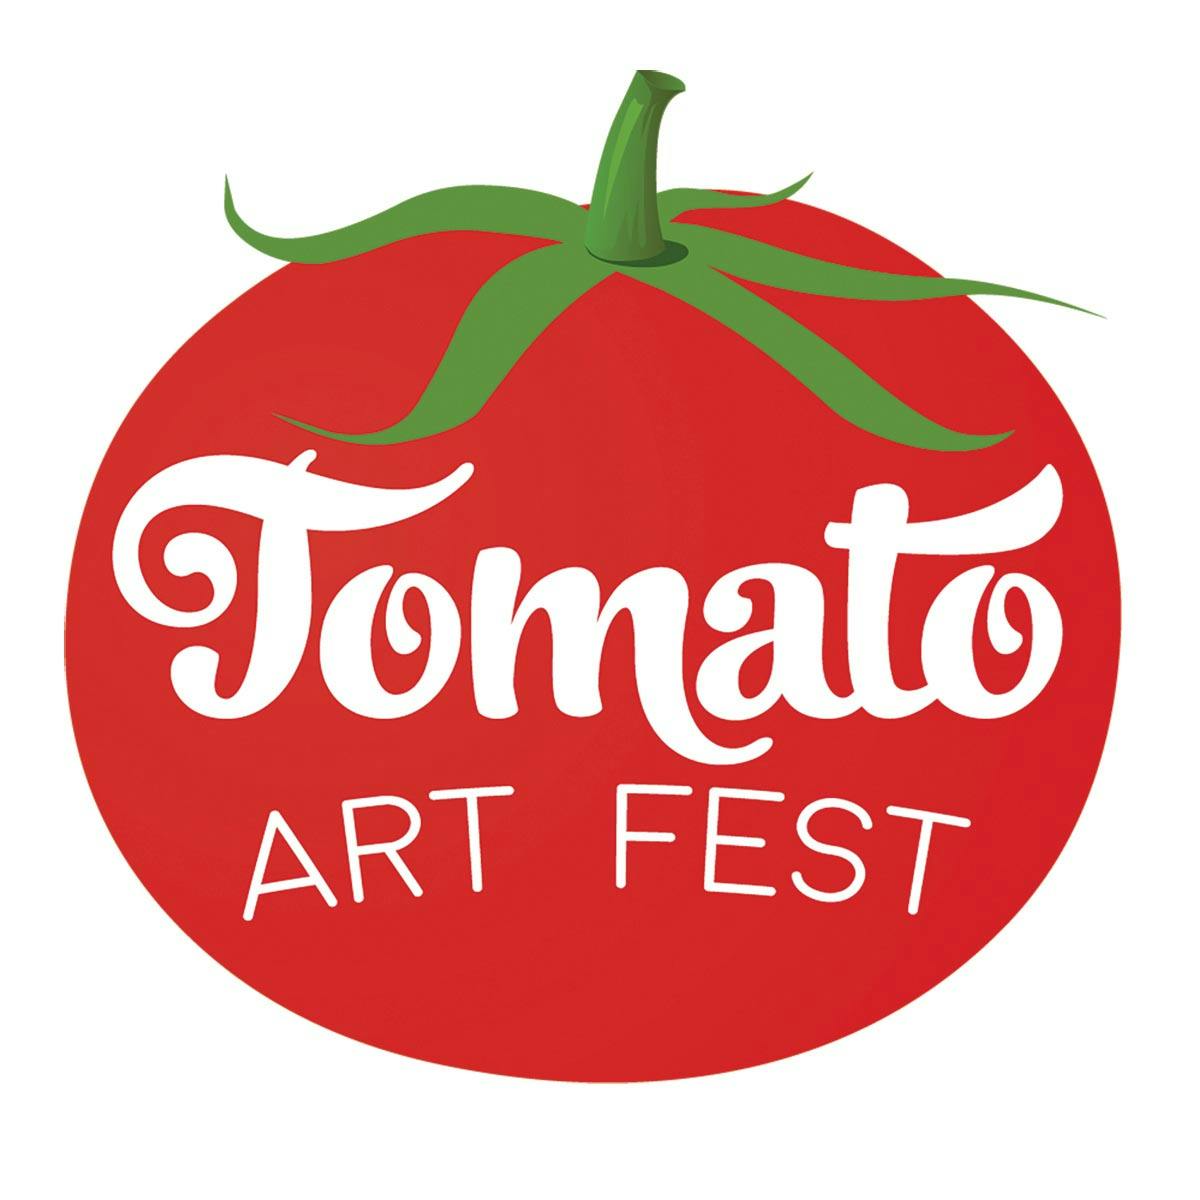 Tomato Art Fest